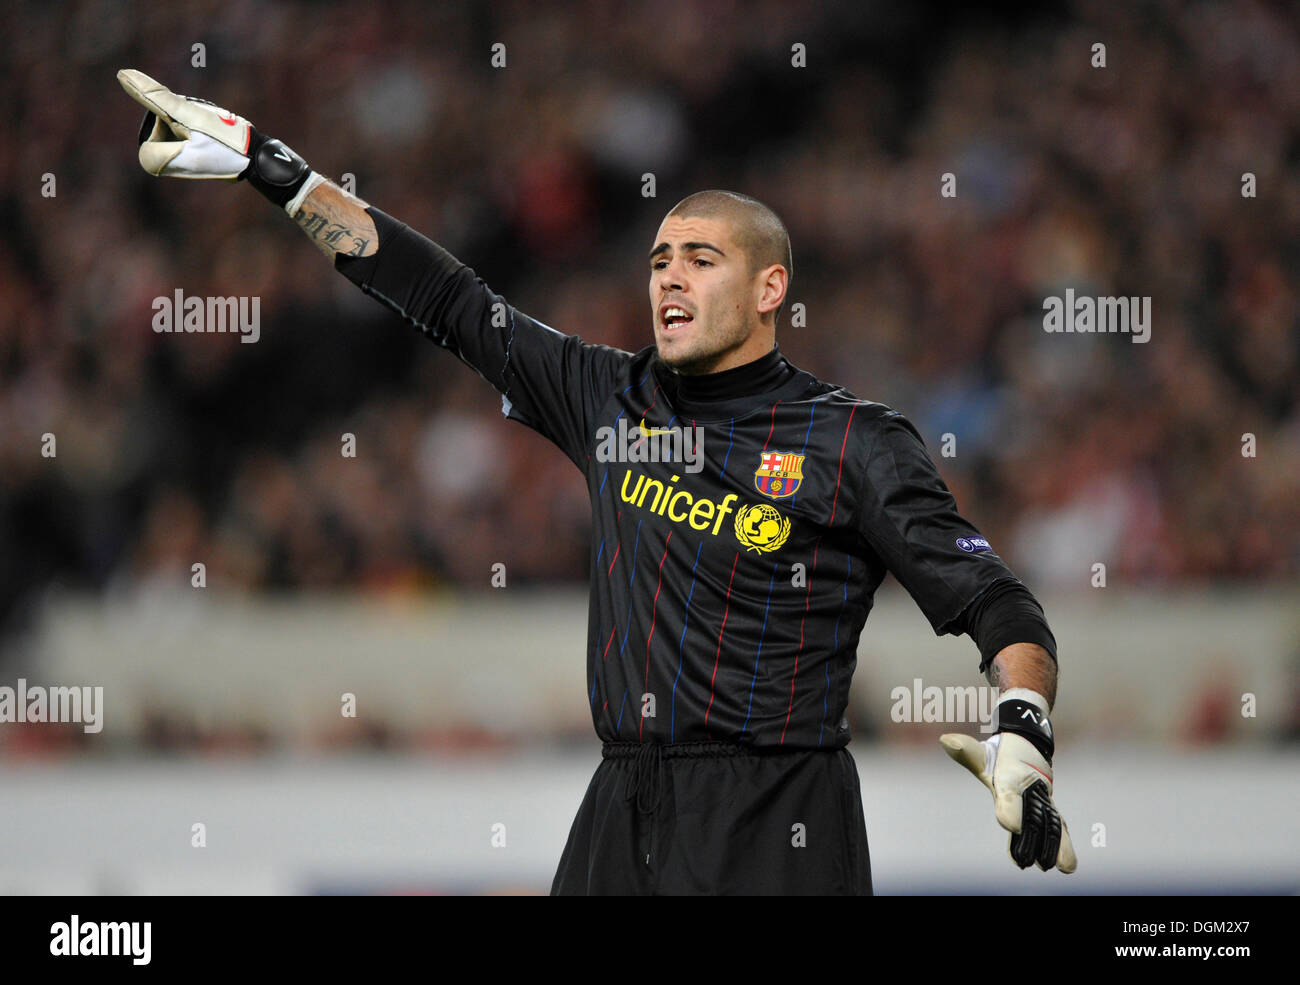 Goalkeeper Victor VALDES, FC Barcelona, structuring the defense Stock Photo